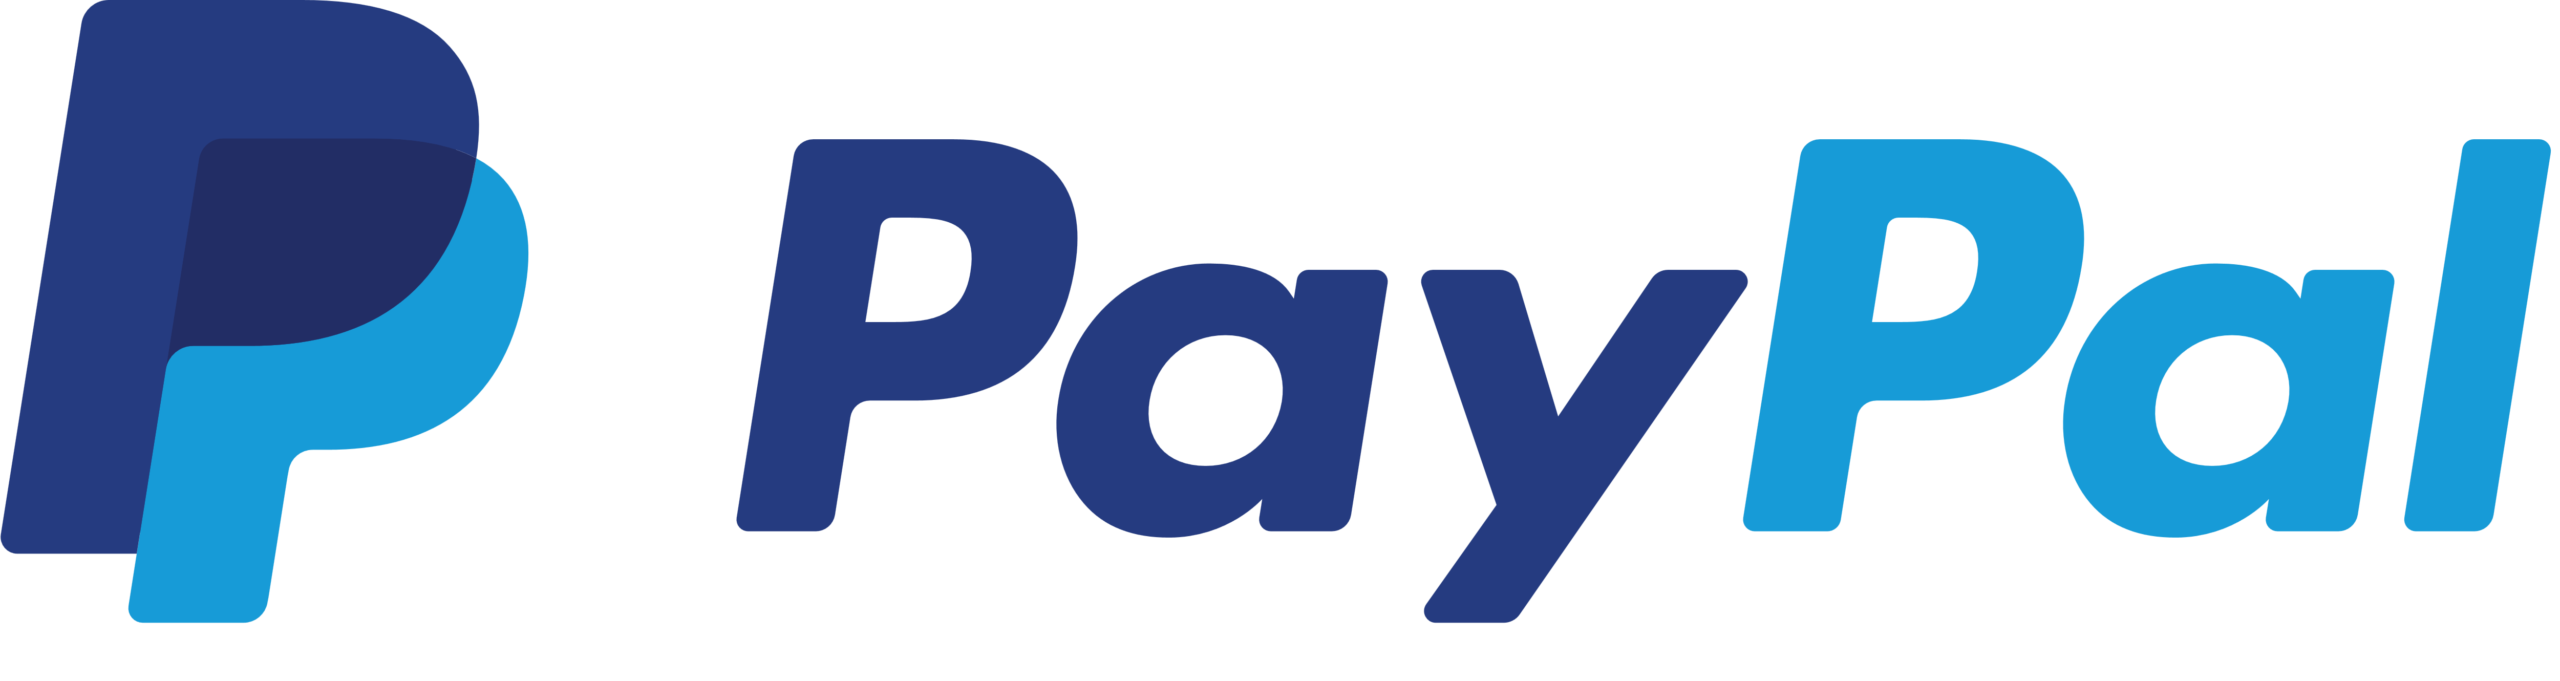 https://serragaucha.hostnet.com.br/wp-content/uploads/2022/07/paypal-logo-scaled.webp